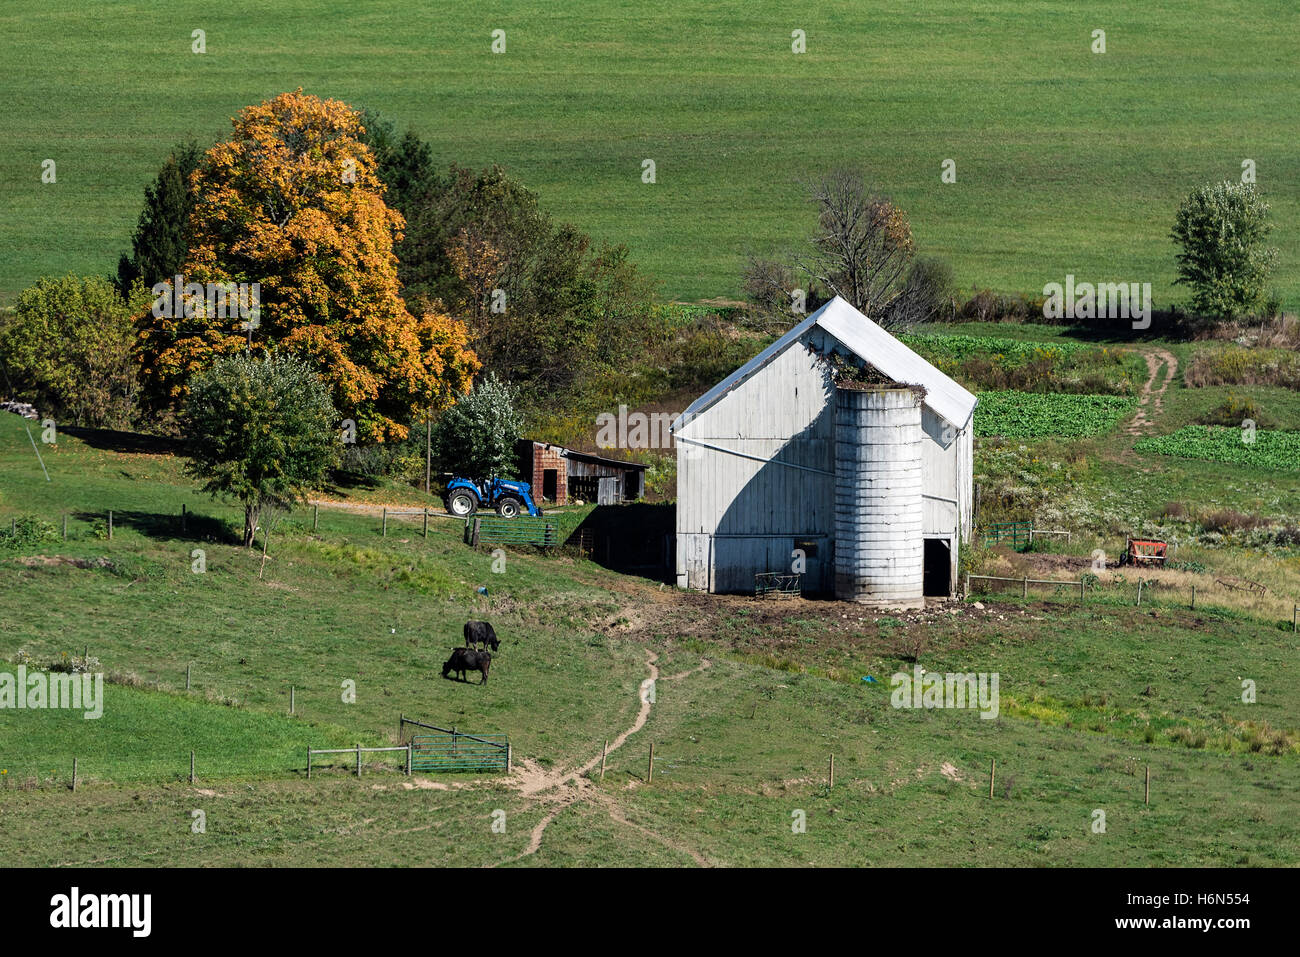 Livestock barn and feeding cattle, Ohio, USA. Stock Photo